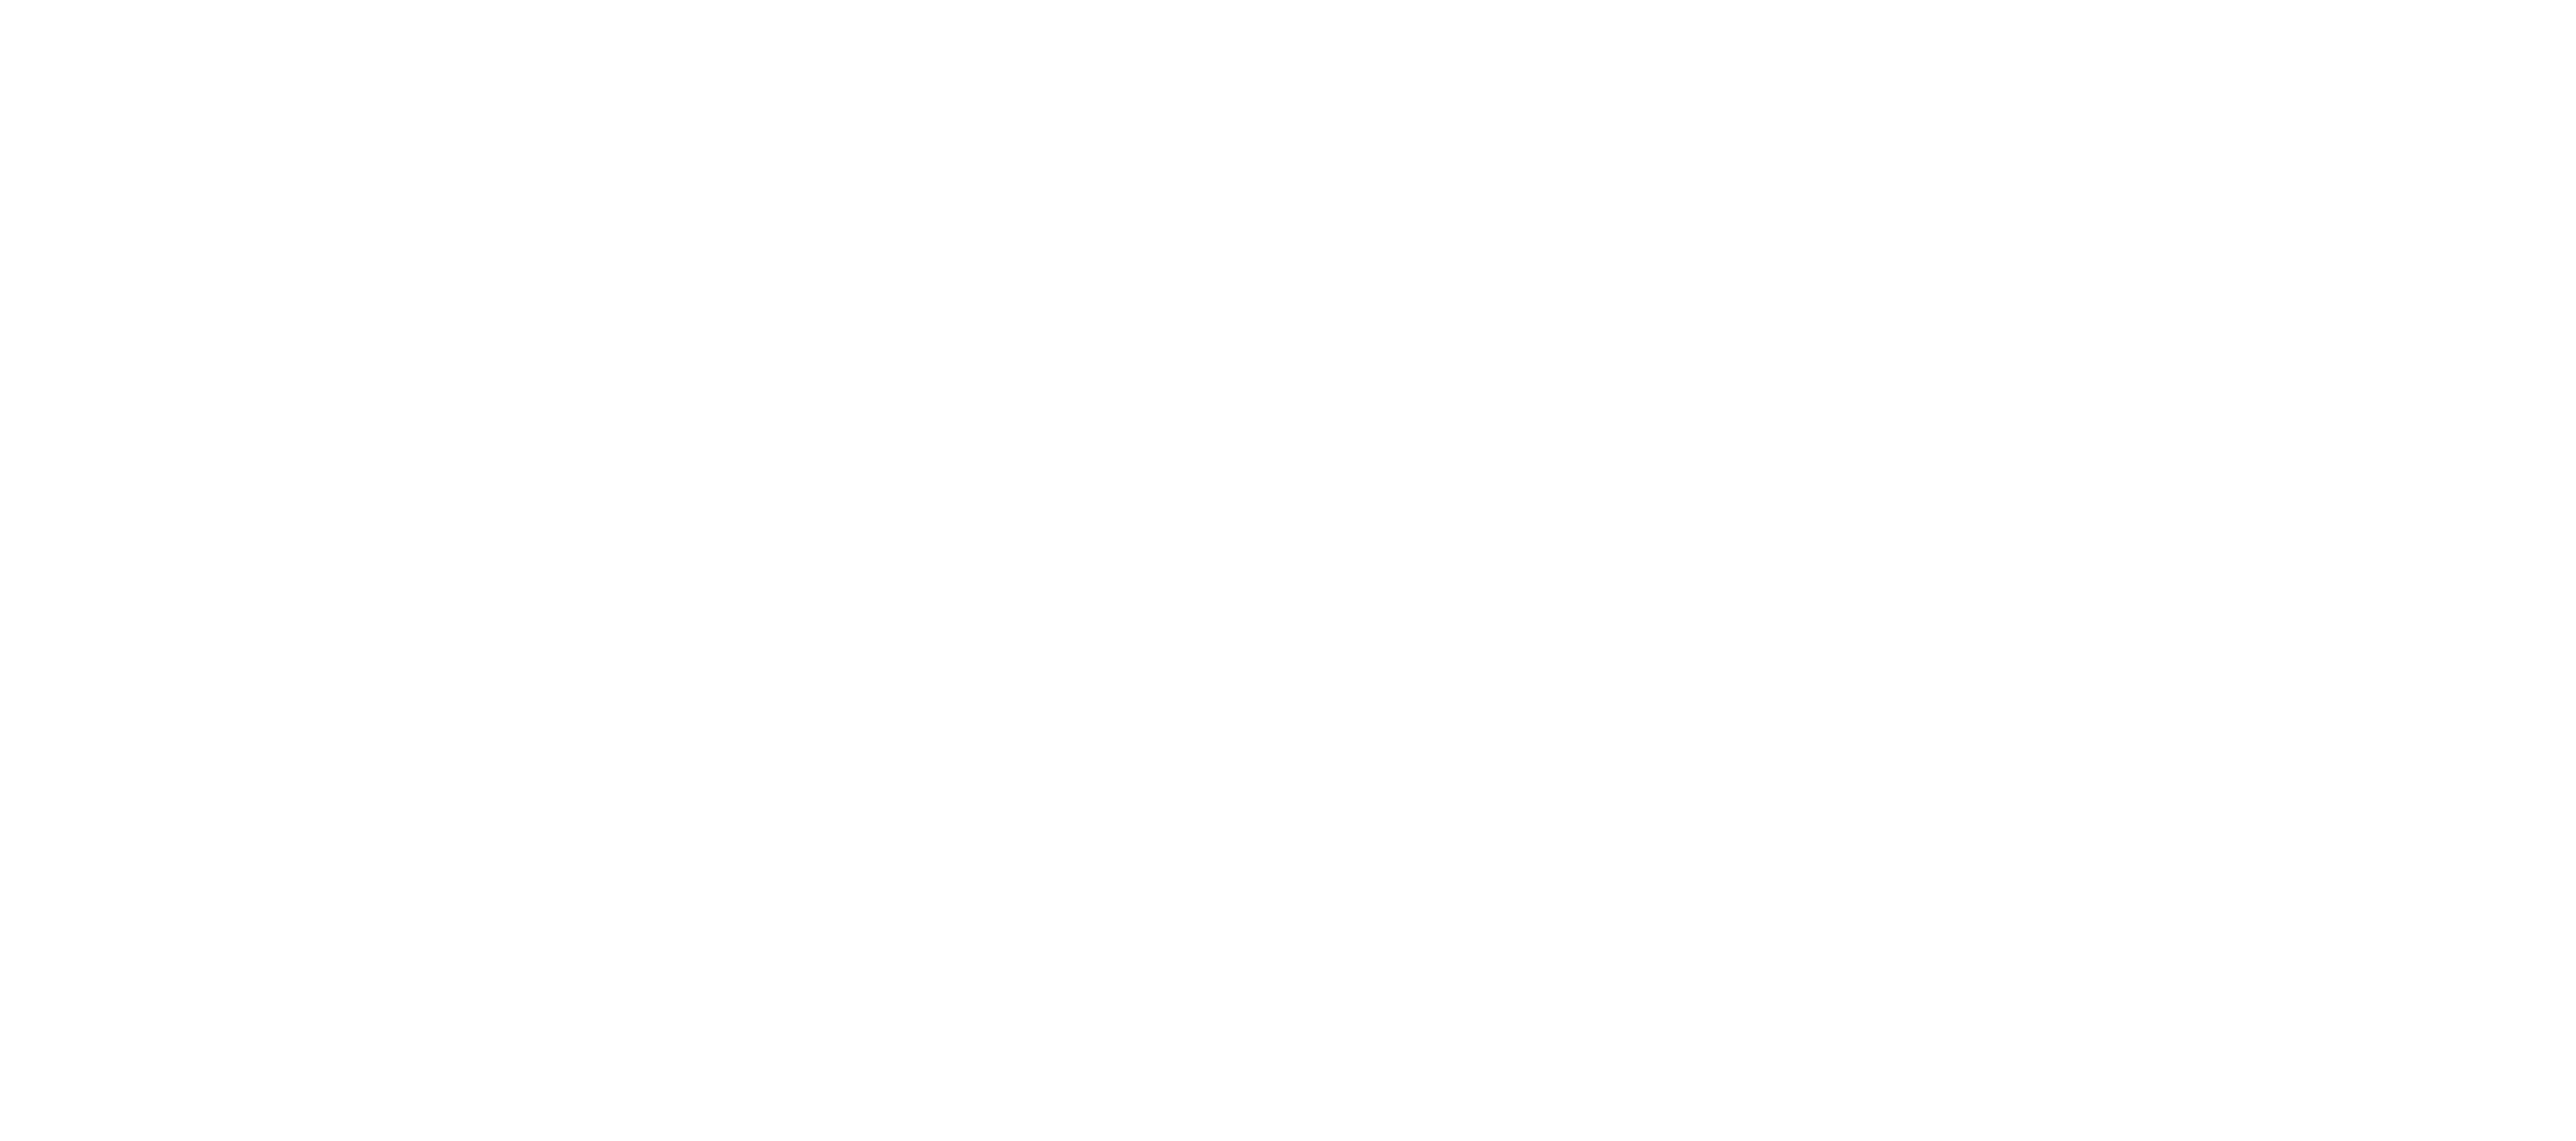 Logo Annamore blanc